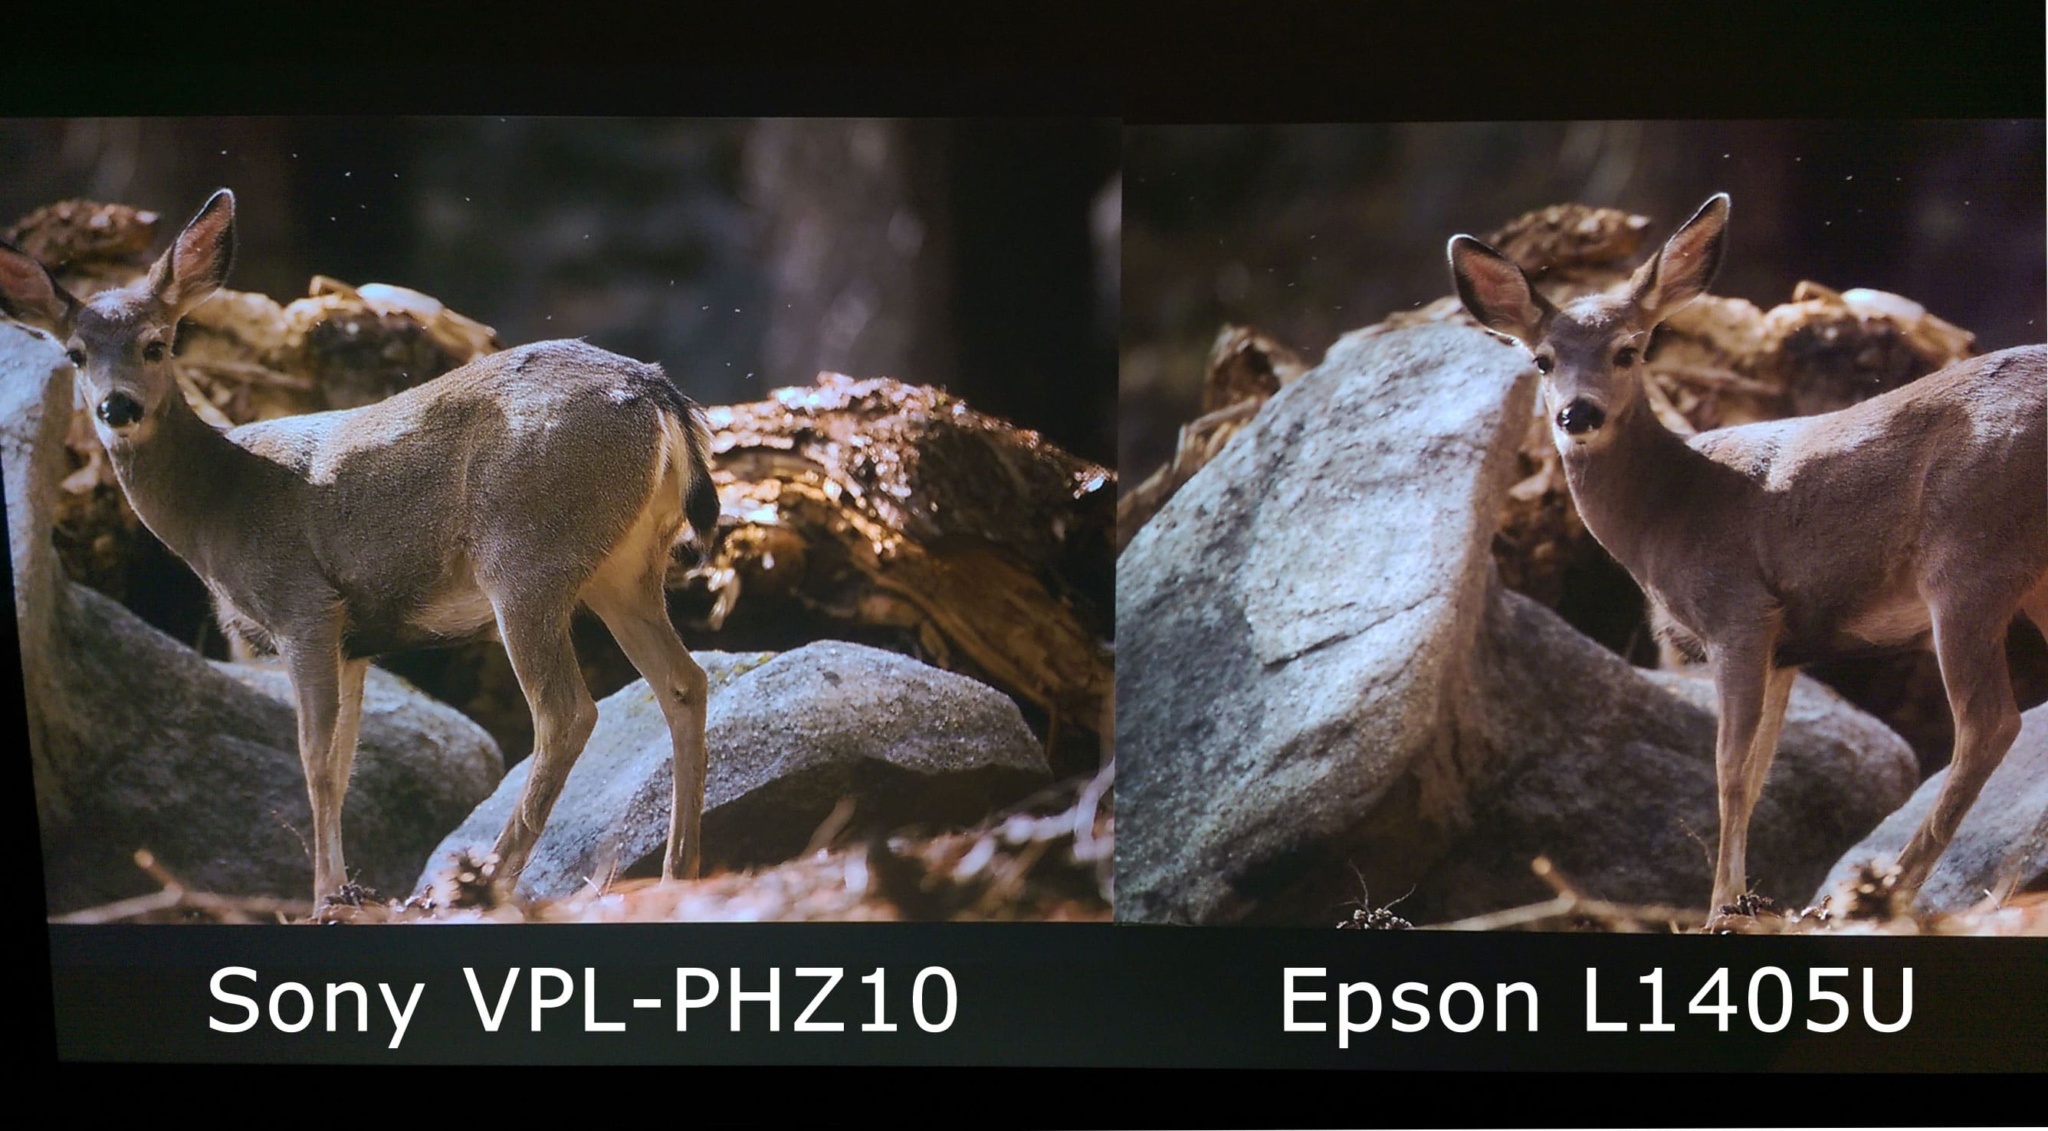 Detail Comparison on Sony VPL-PHZ10 next to Epson L1405U